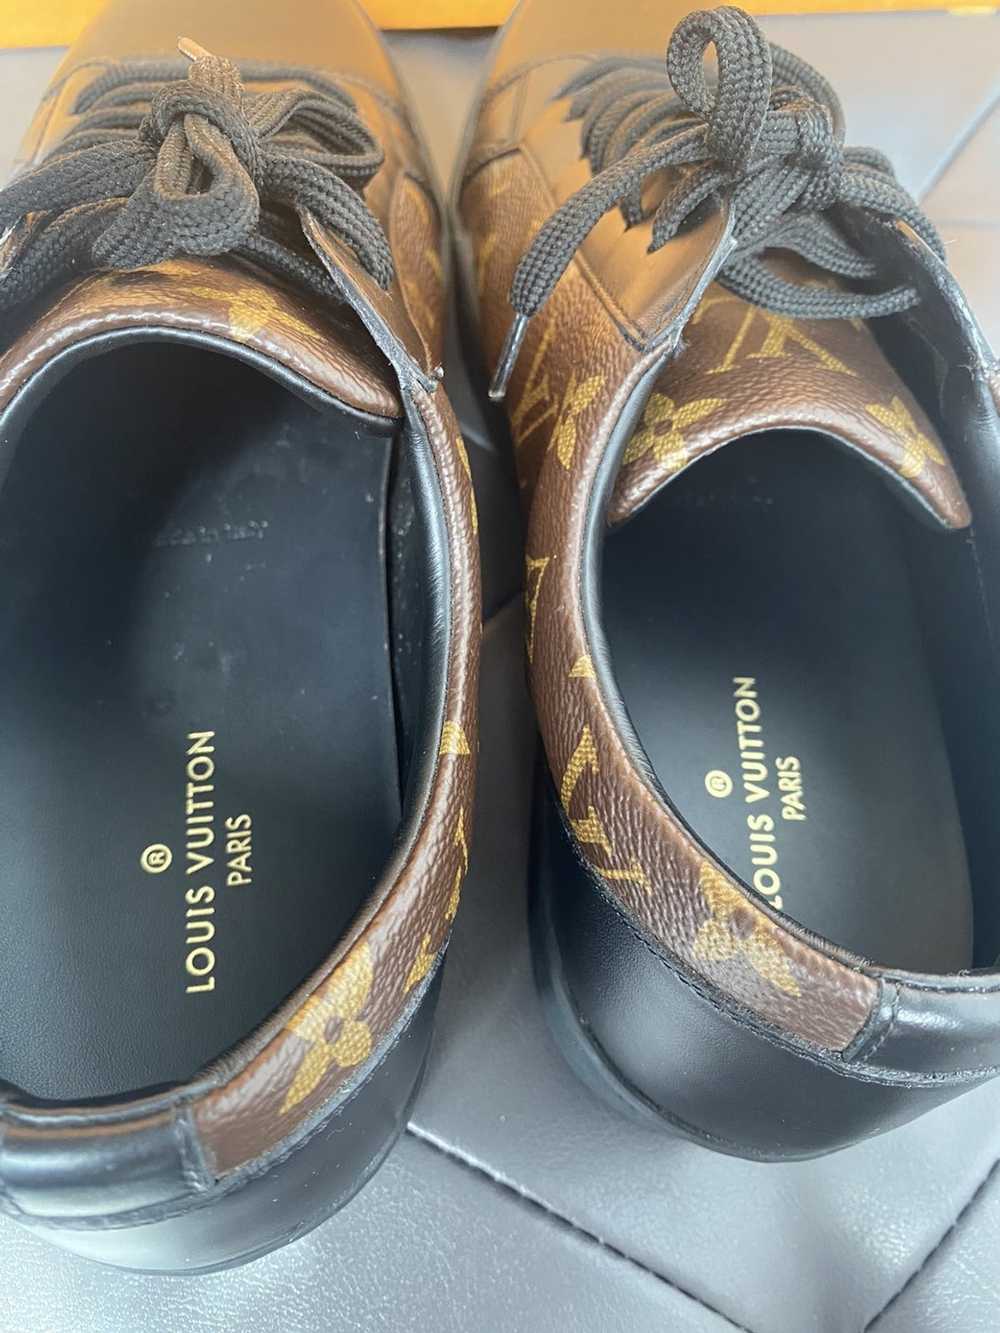 Size 8.5US/7.5LV Louis Vuitton Runner Tatic Trainer Shoe $1340